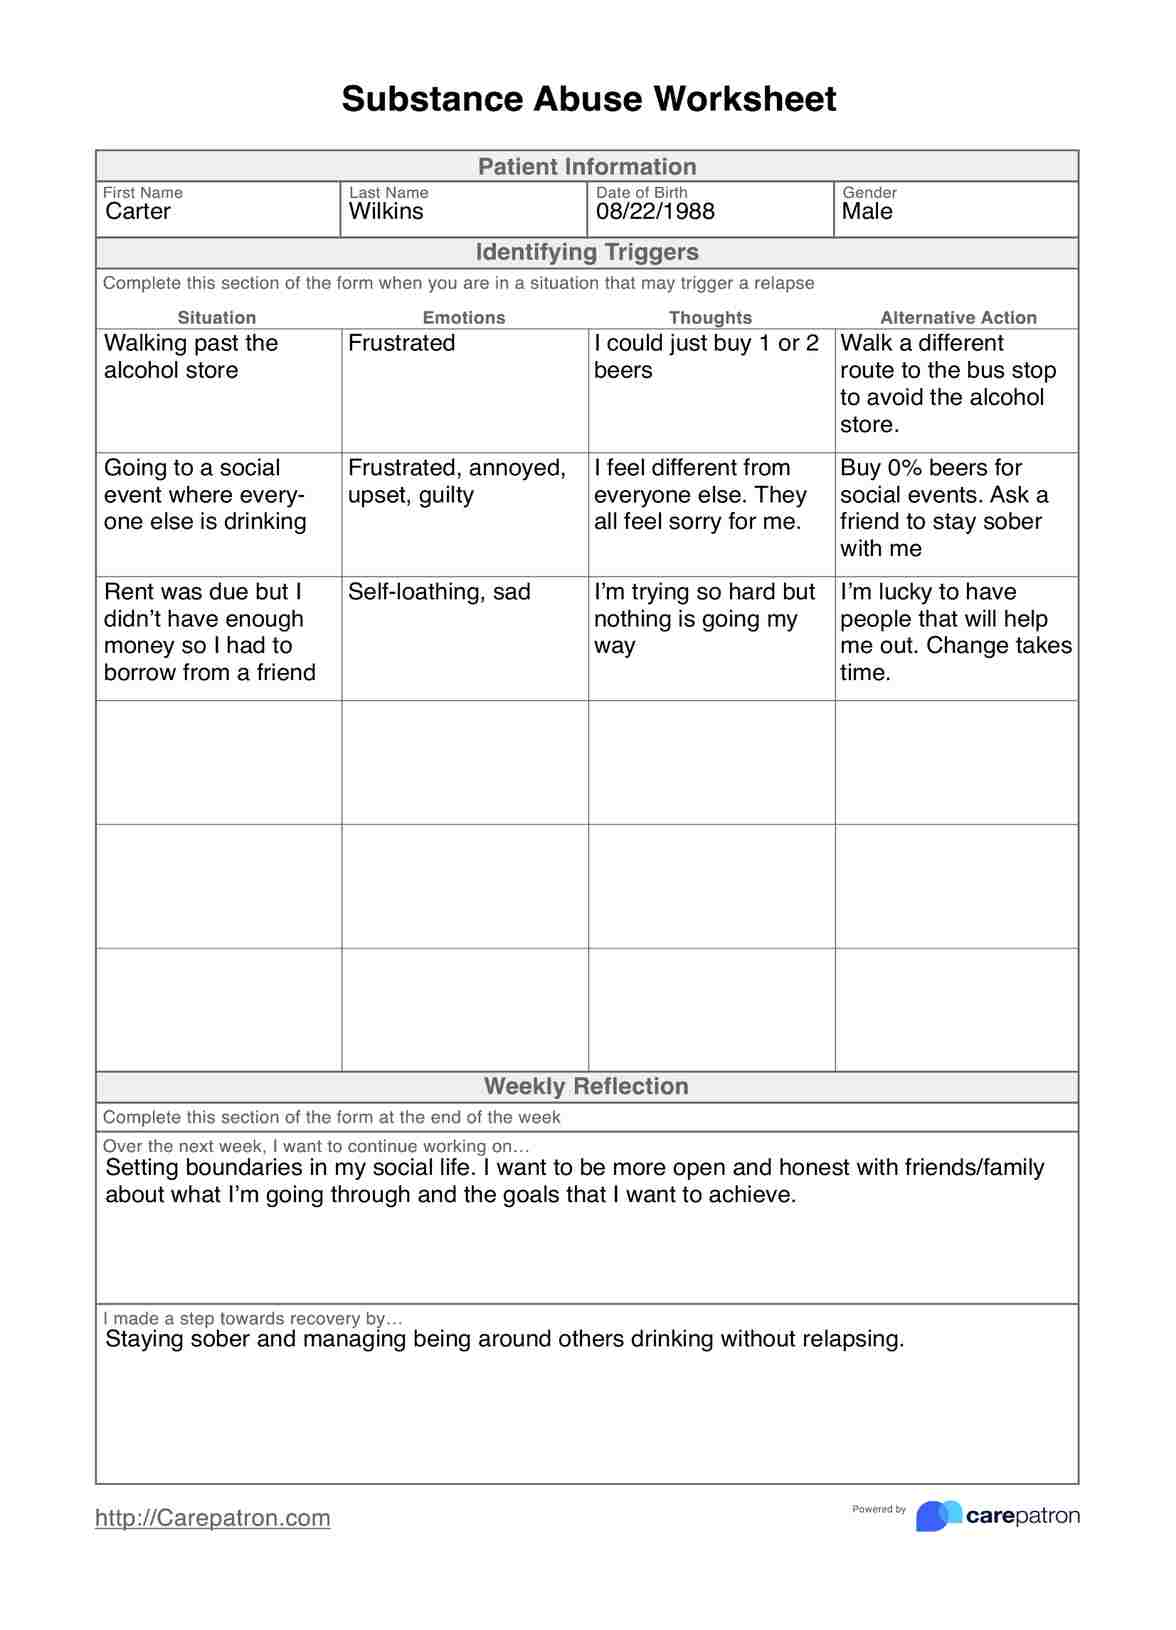 Substance Abuse Worksheet PDF Example